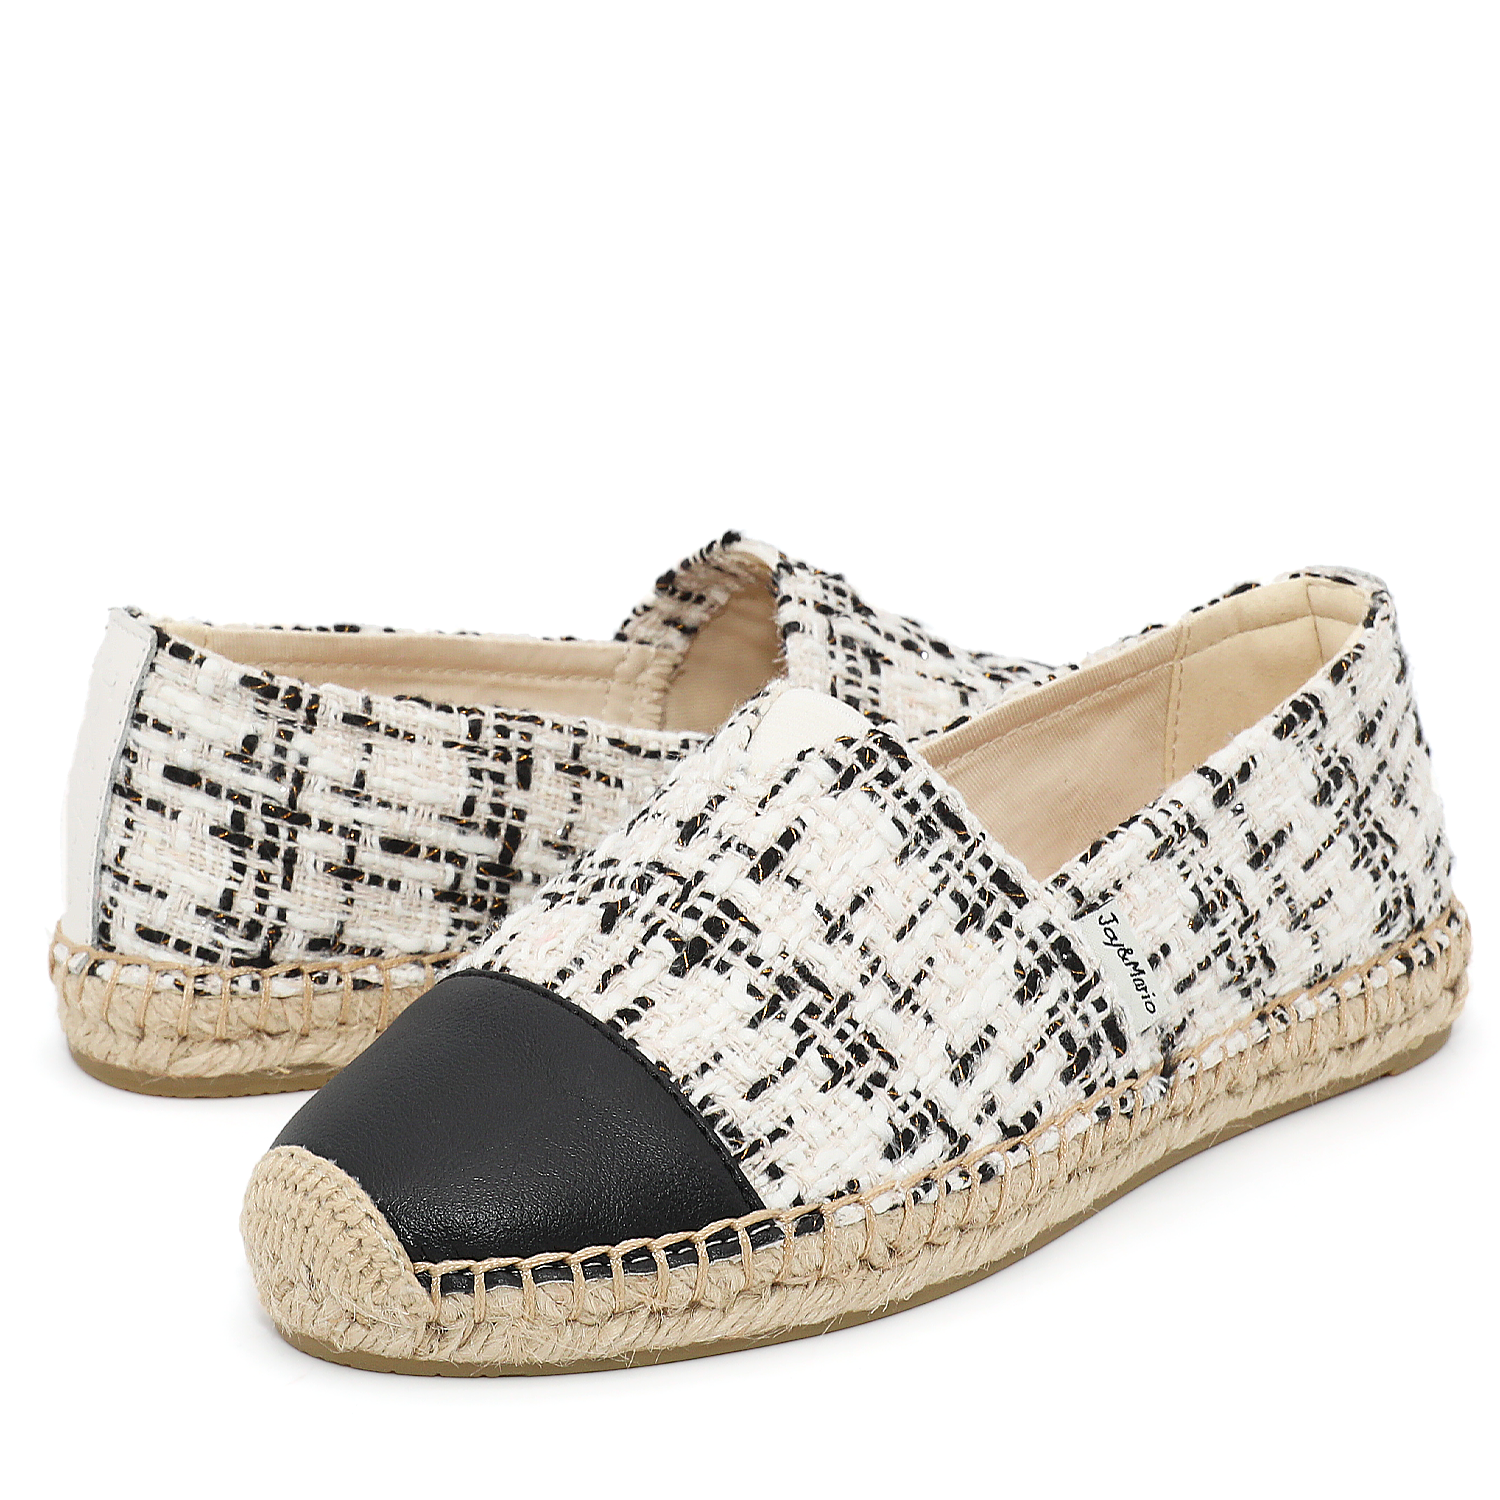 JOY&MARIO Handmade Women’s Slip-On Espadrille Tweed Loafers Flats in White-A01962W